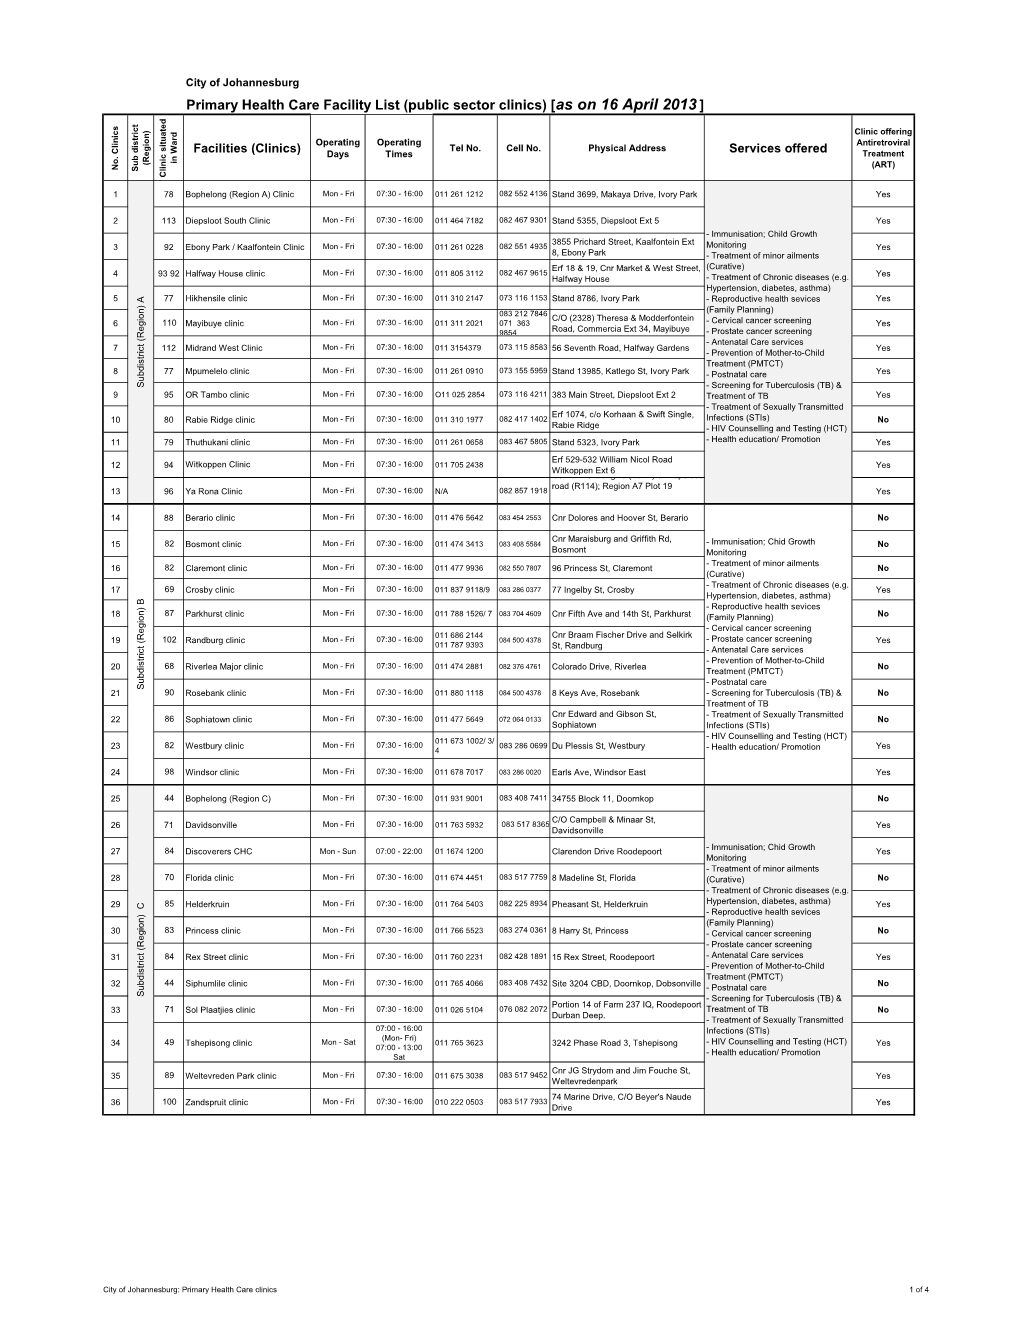 Primary Health Care Facility List (Public Sector Clinics) [As on 16 April 2013 ]